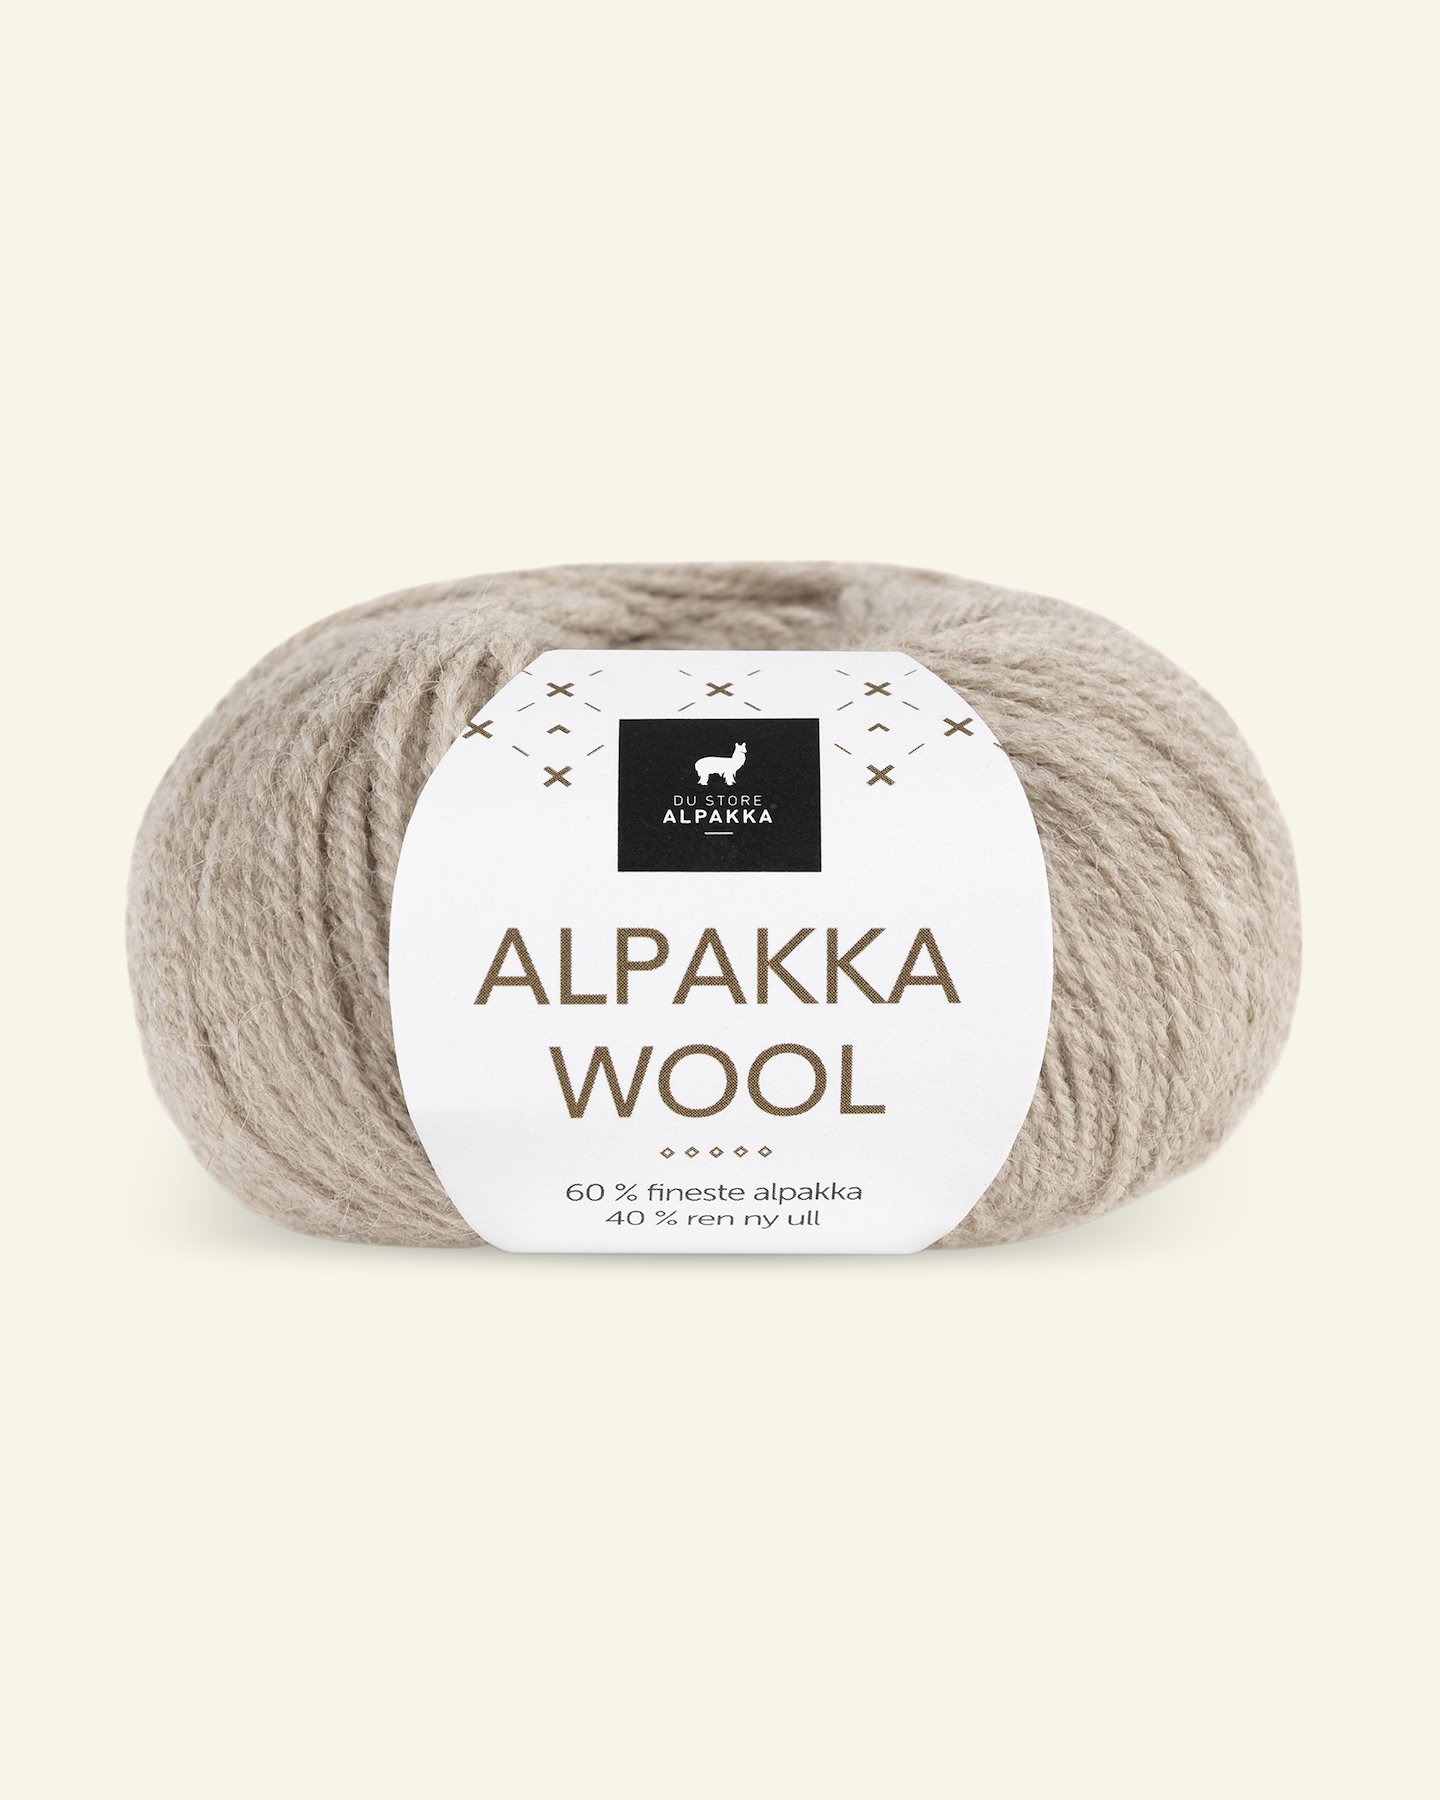 Du Store Alpakka, Alpakka ullgarn "Alpakka Wool", lys beige (505) 90000551_pack